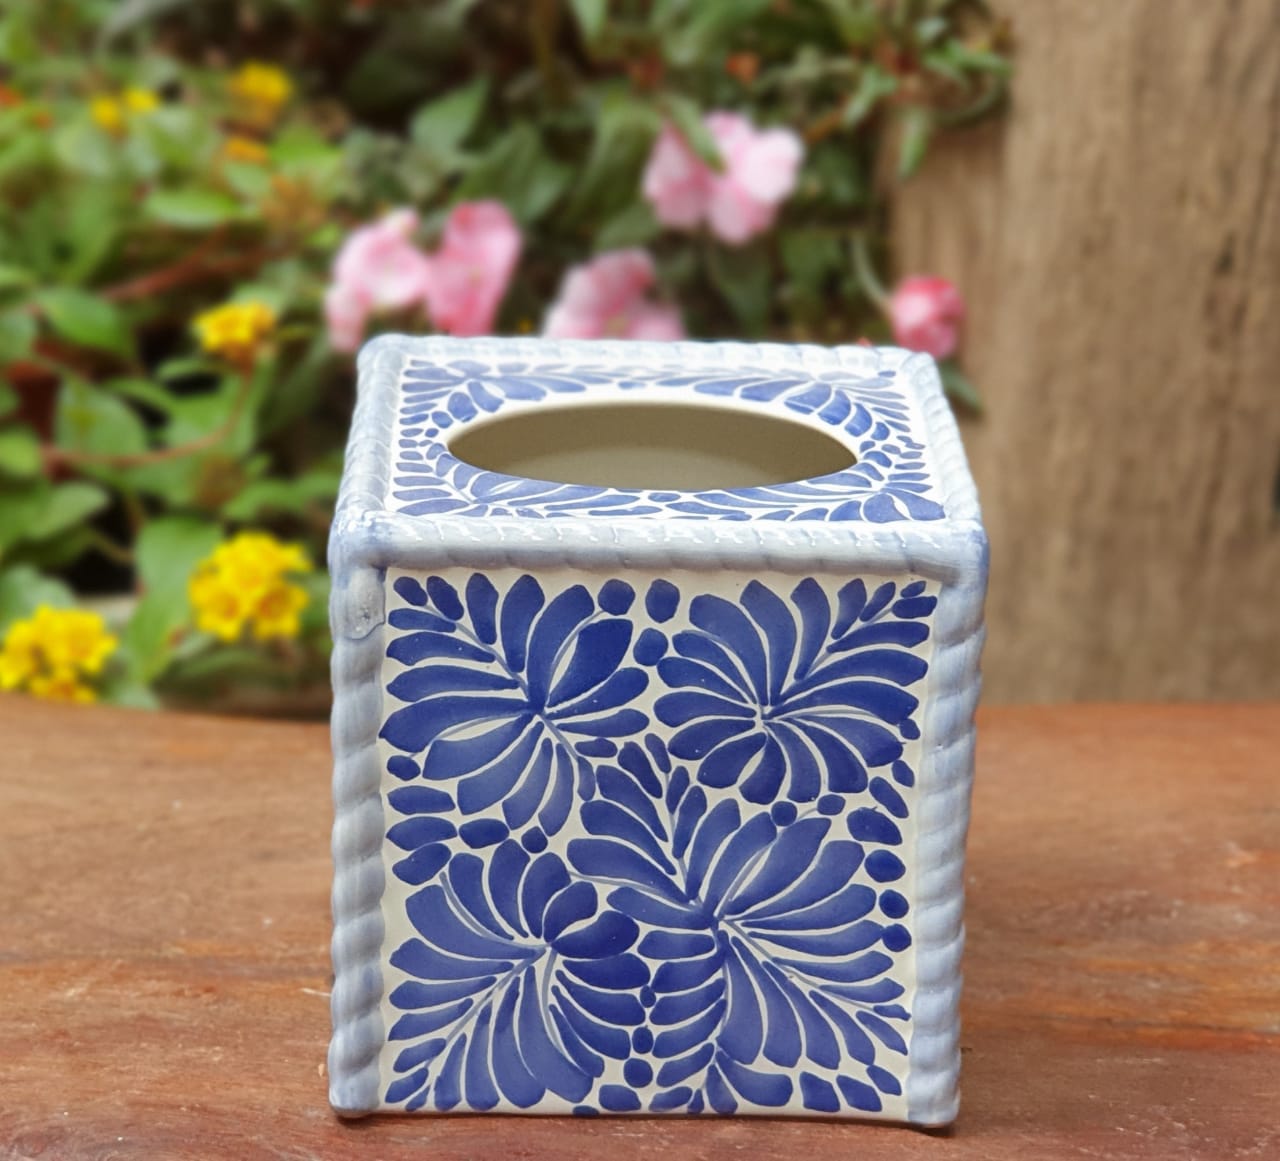 Kleenex Box Large Milestones Blue Talavera / Mayolica Ceramic mexico –  Gorky Gonzalez Store